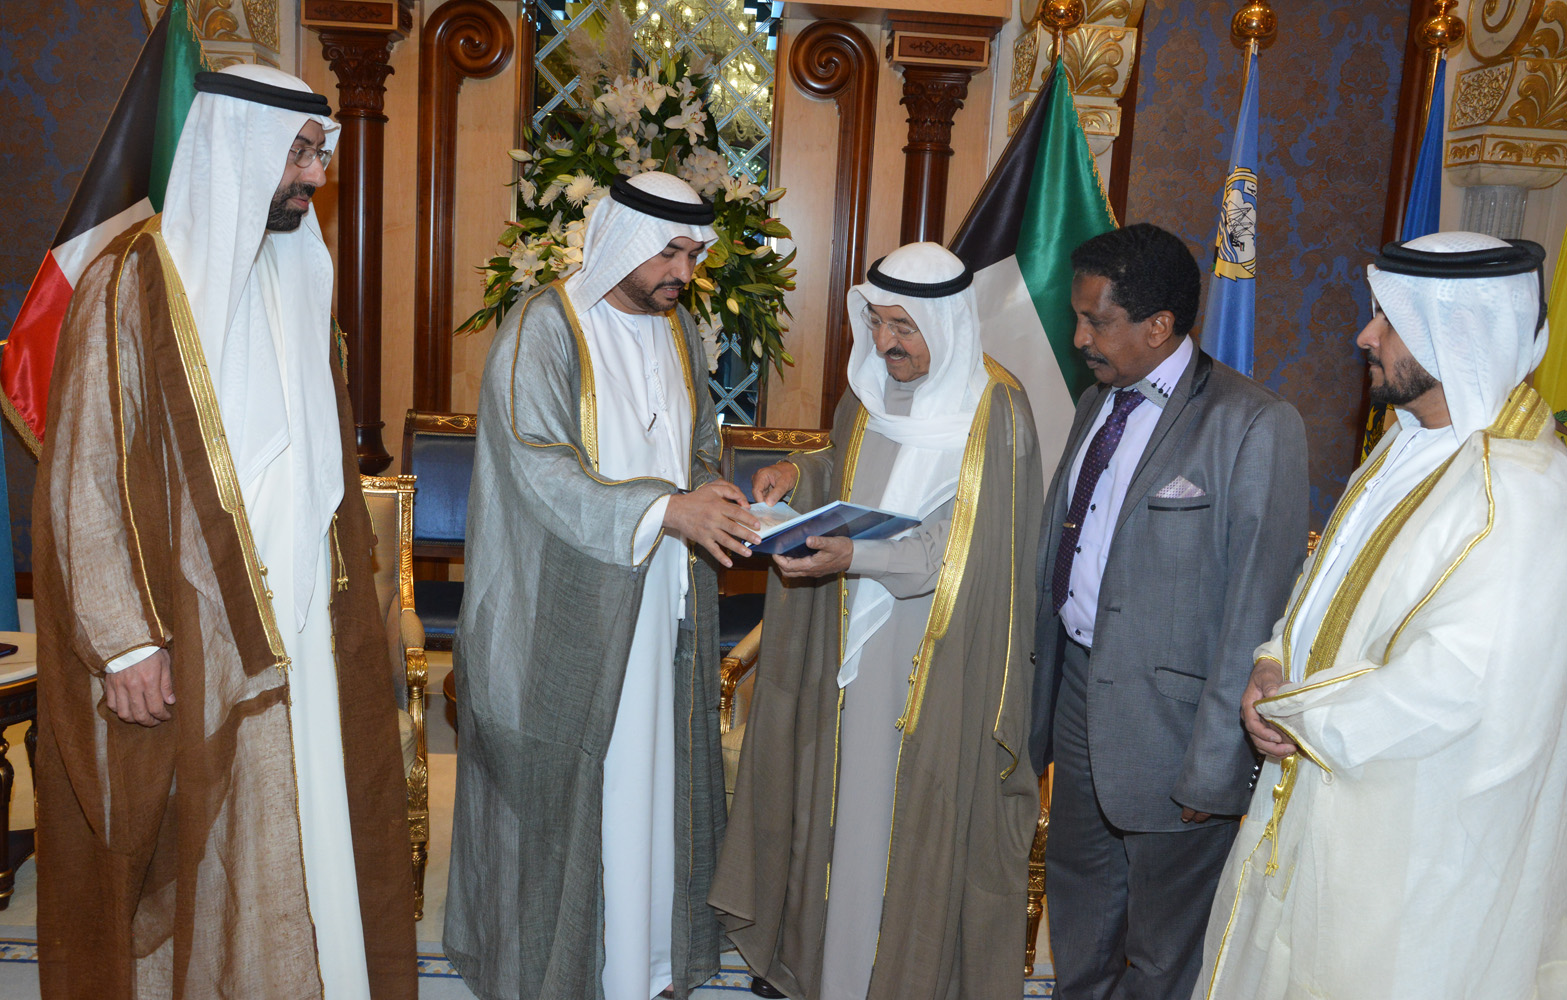 His Highness the Amir Sheikh Sabah Al-Ahmad Al-Jaber Al-Sabah met visiting Chairman of the Board of Trustees of the Arab Family Organization (AFO) Jamal Al-Bah and Mr. Saif Salem Rashed Al-Shamsi